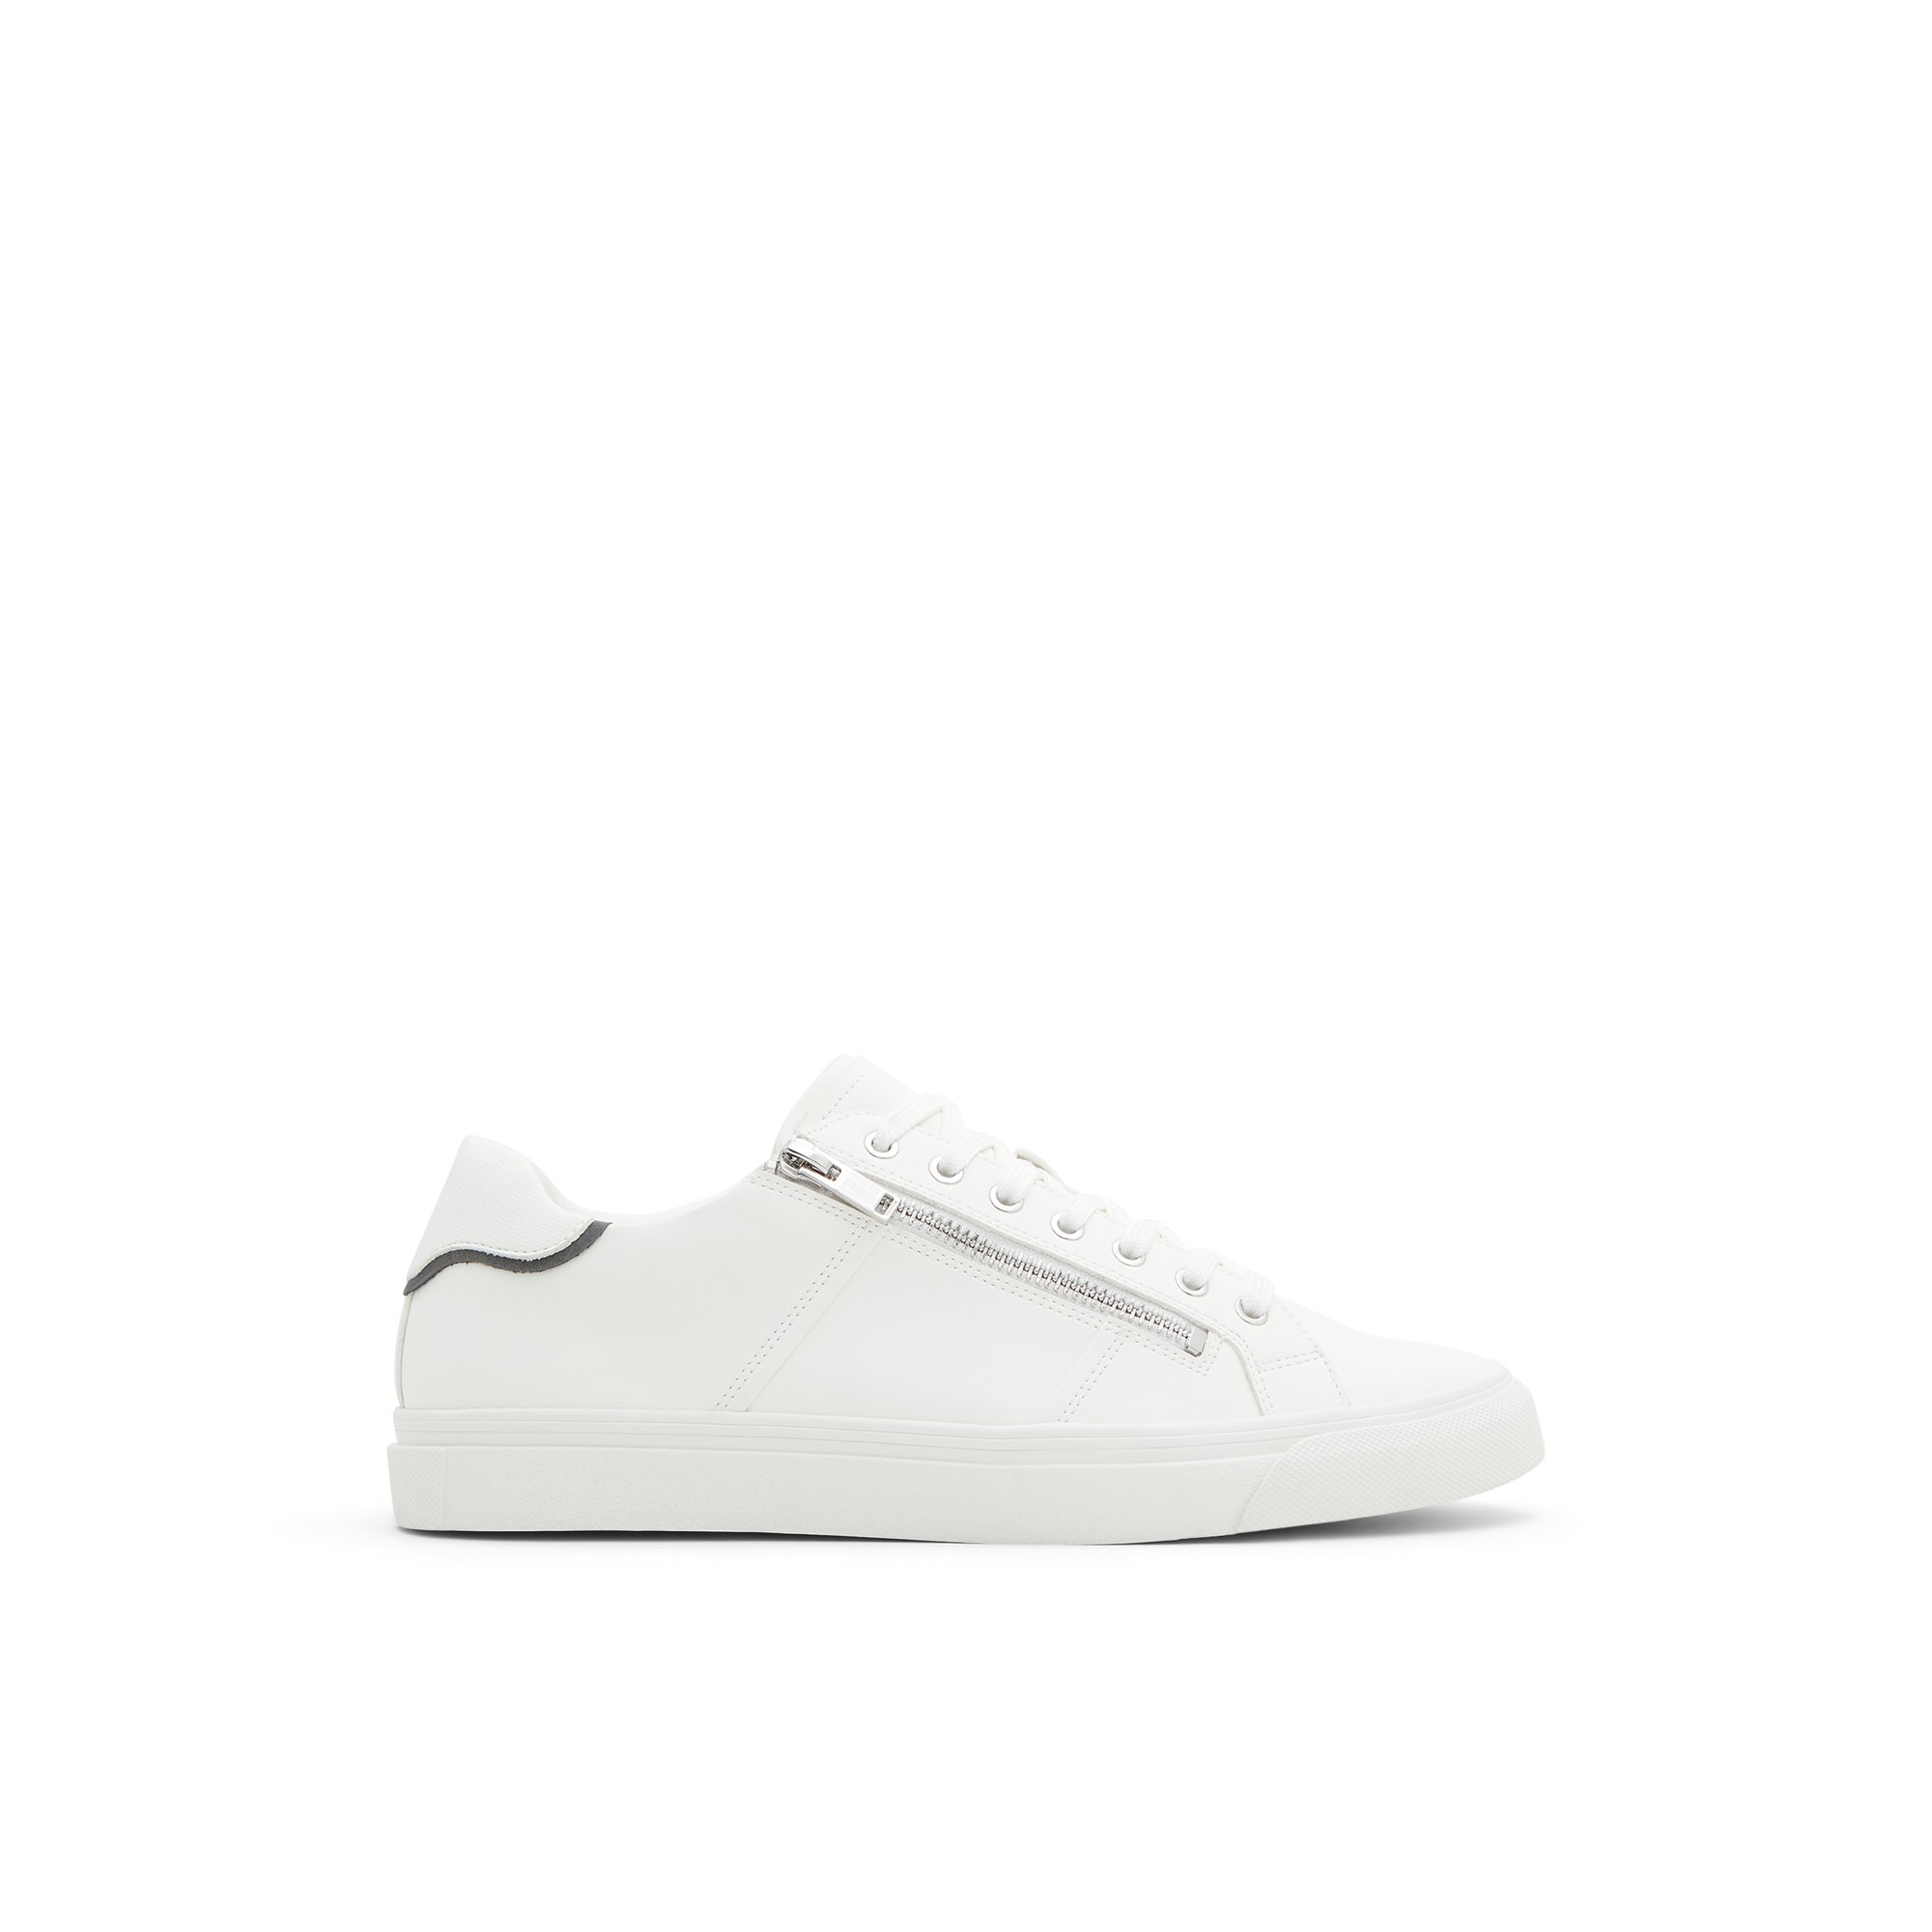 ALDO Bowsprit - Men's Athletic Sneaker Sneakers - White